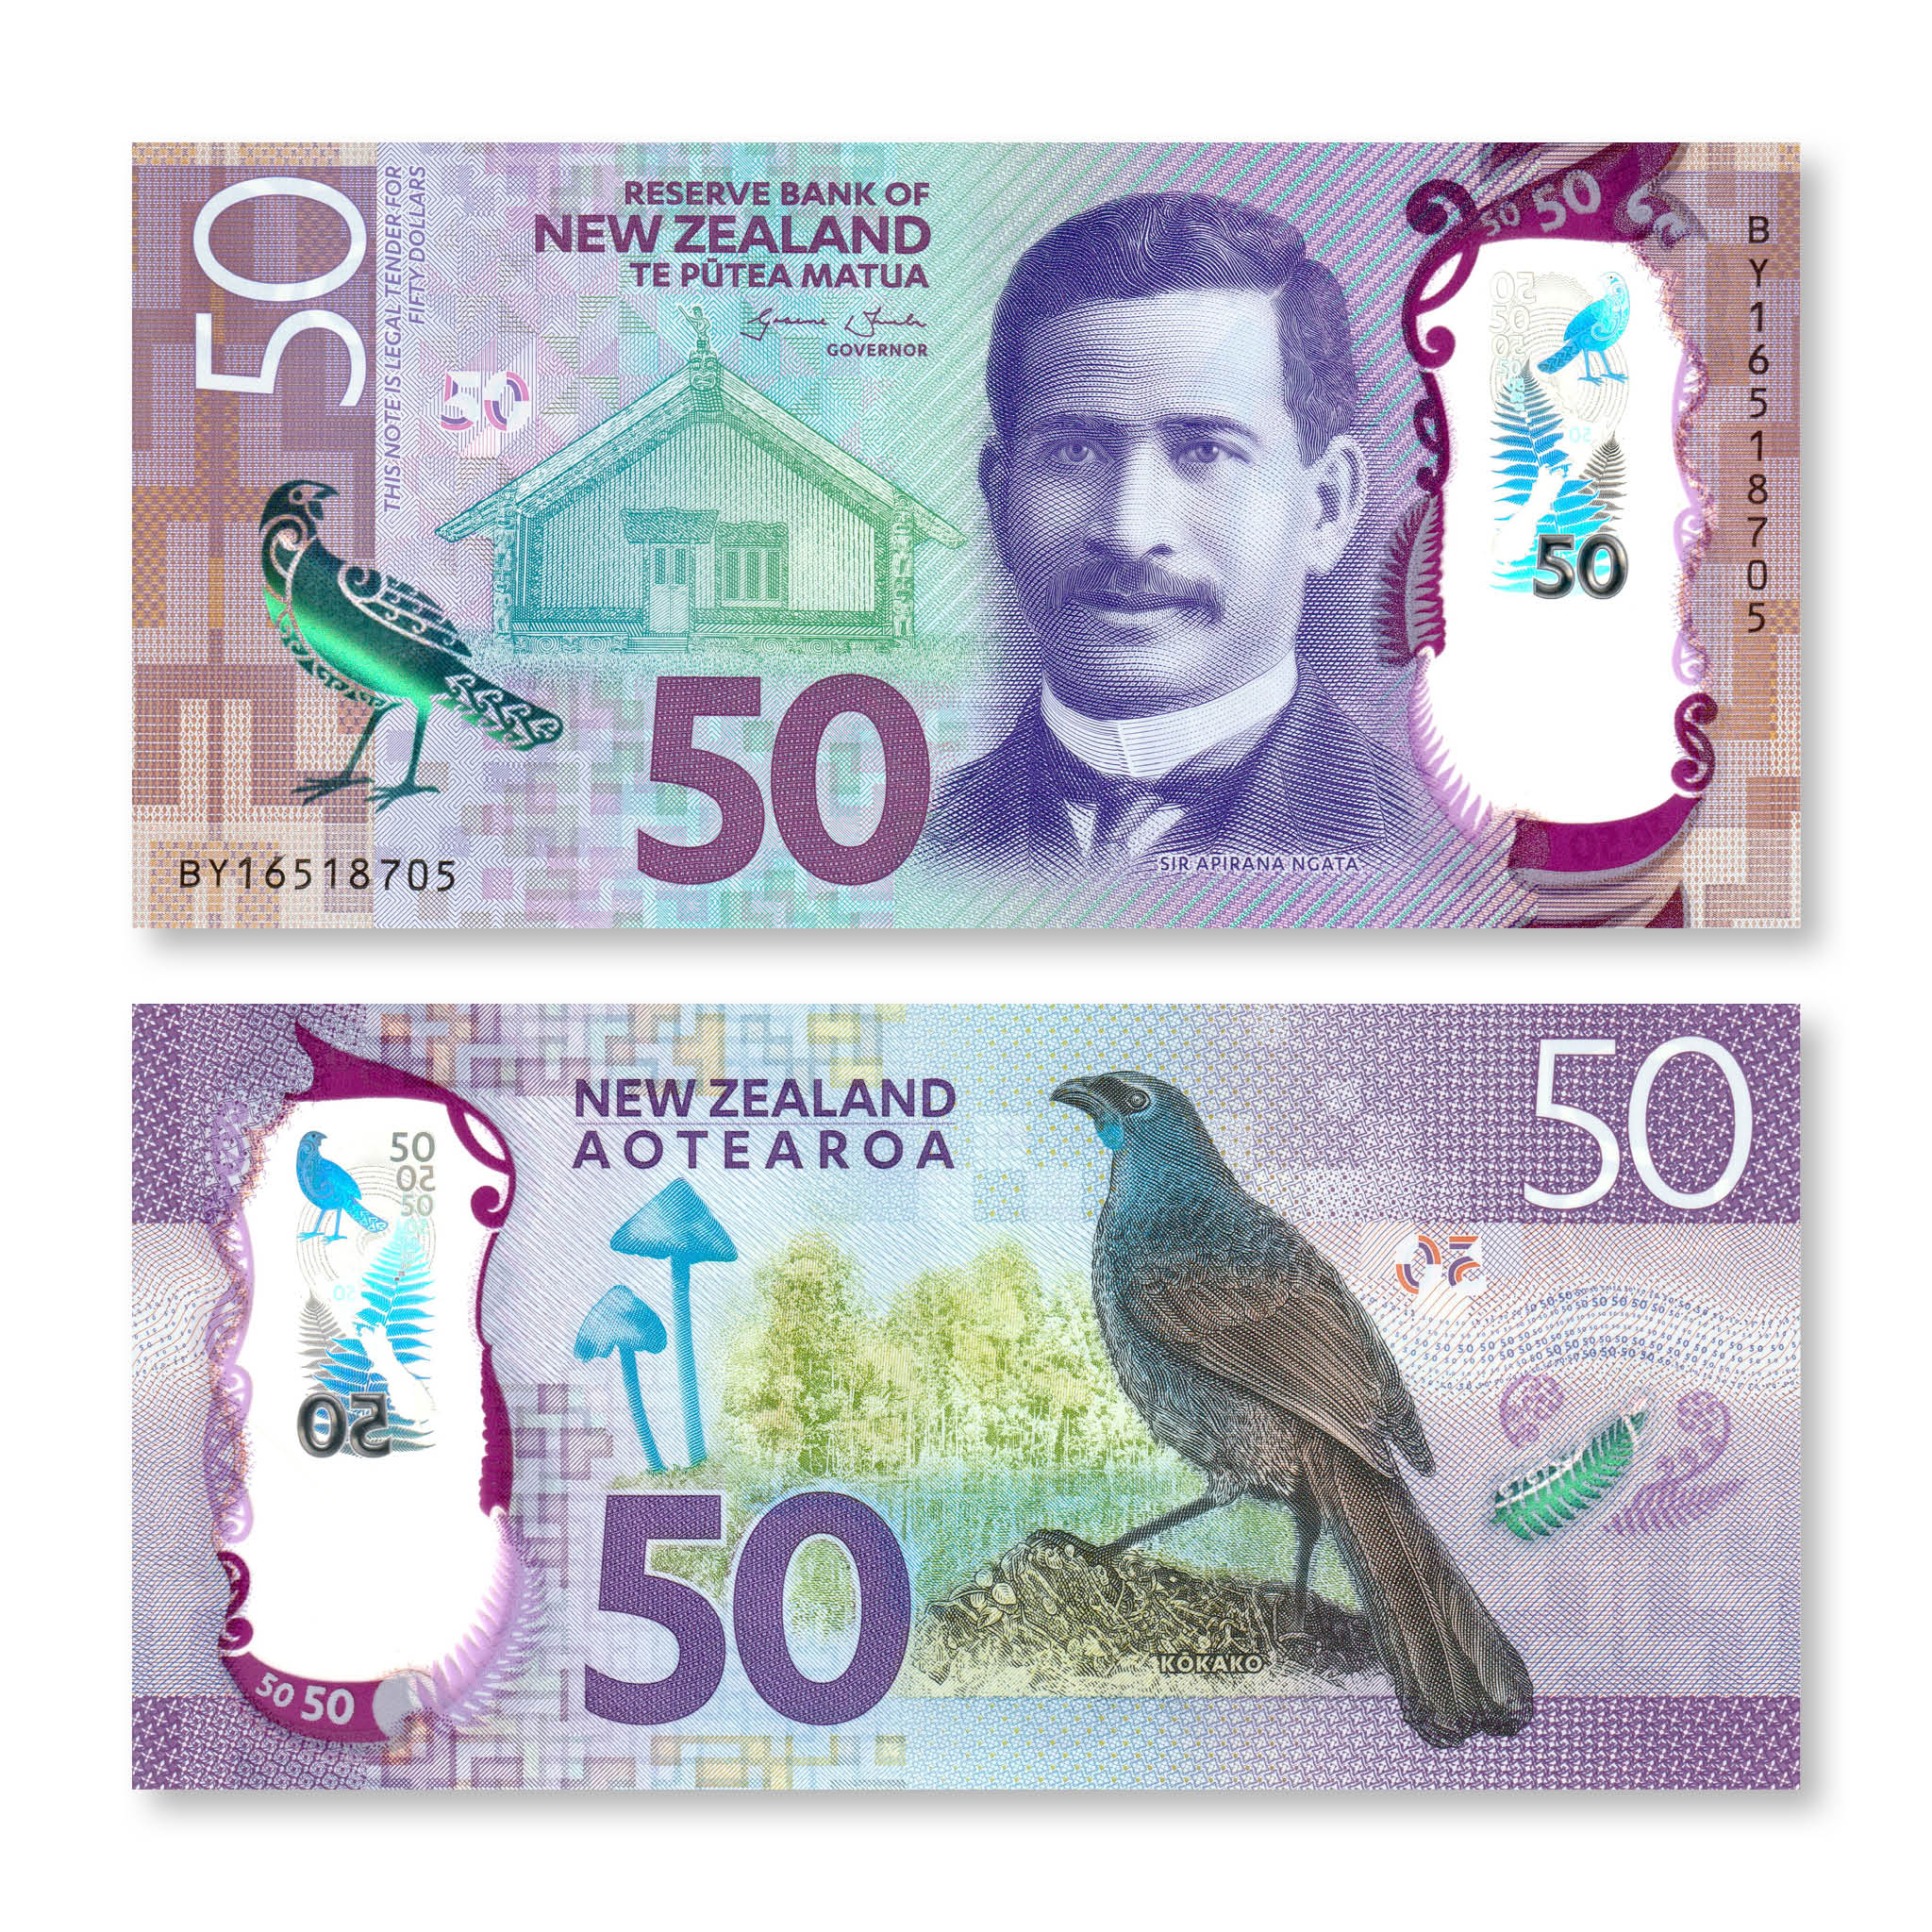 New Zealand 50 Dollars, 2016, B140a, P194, UNC - Robert's World Money - World Banknotes